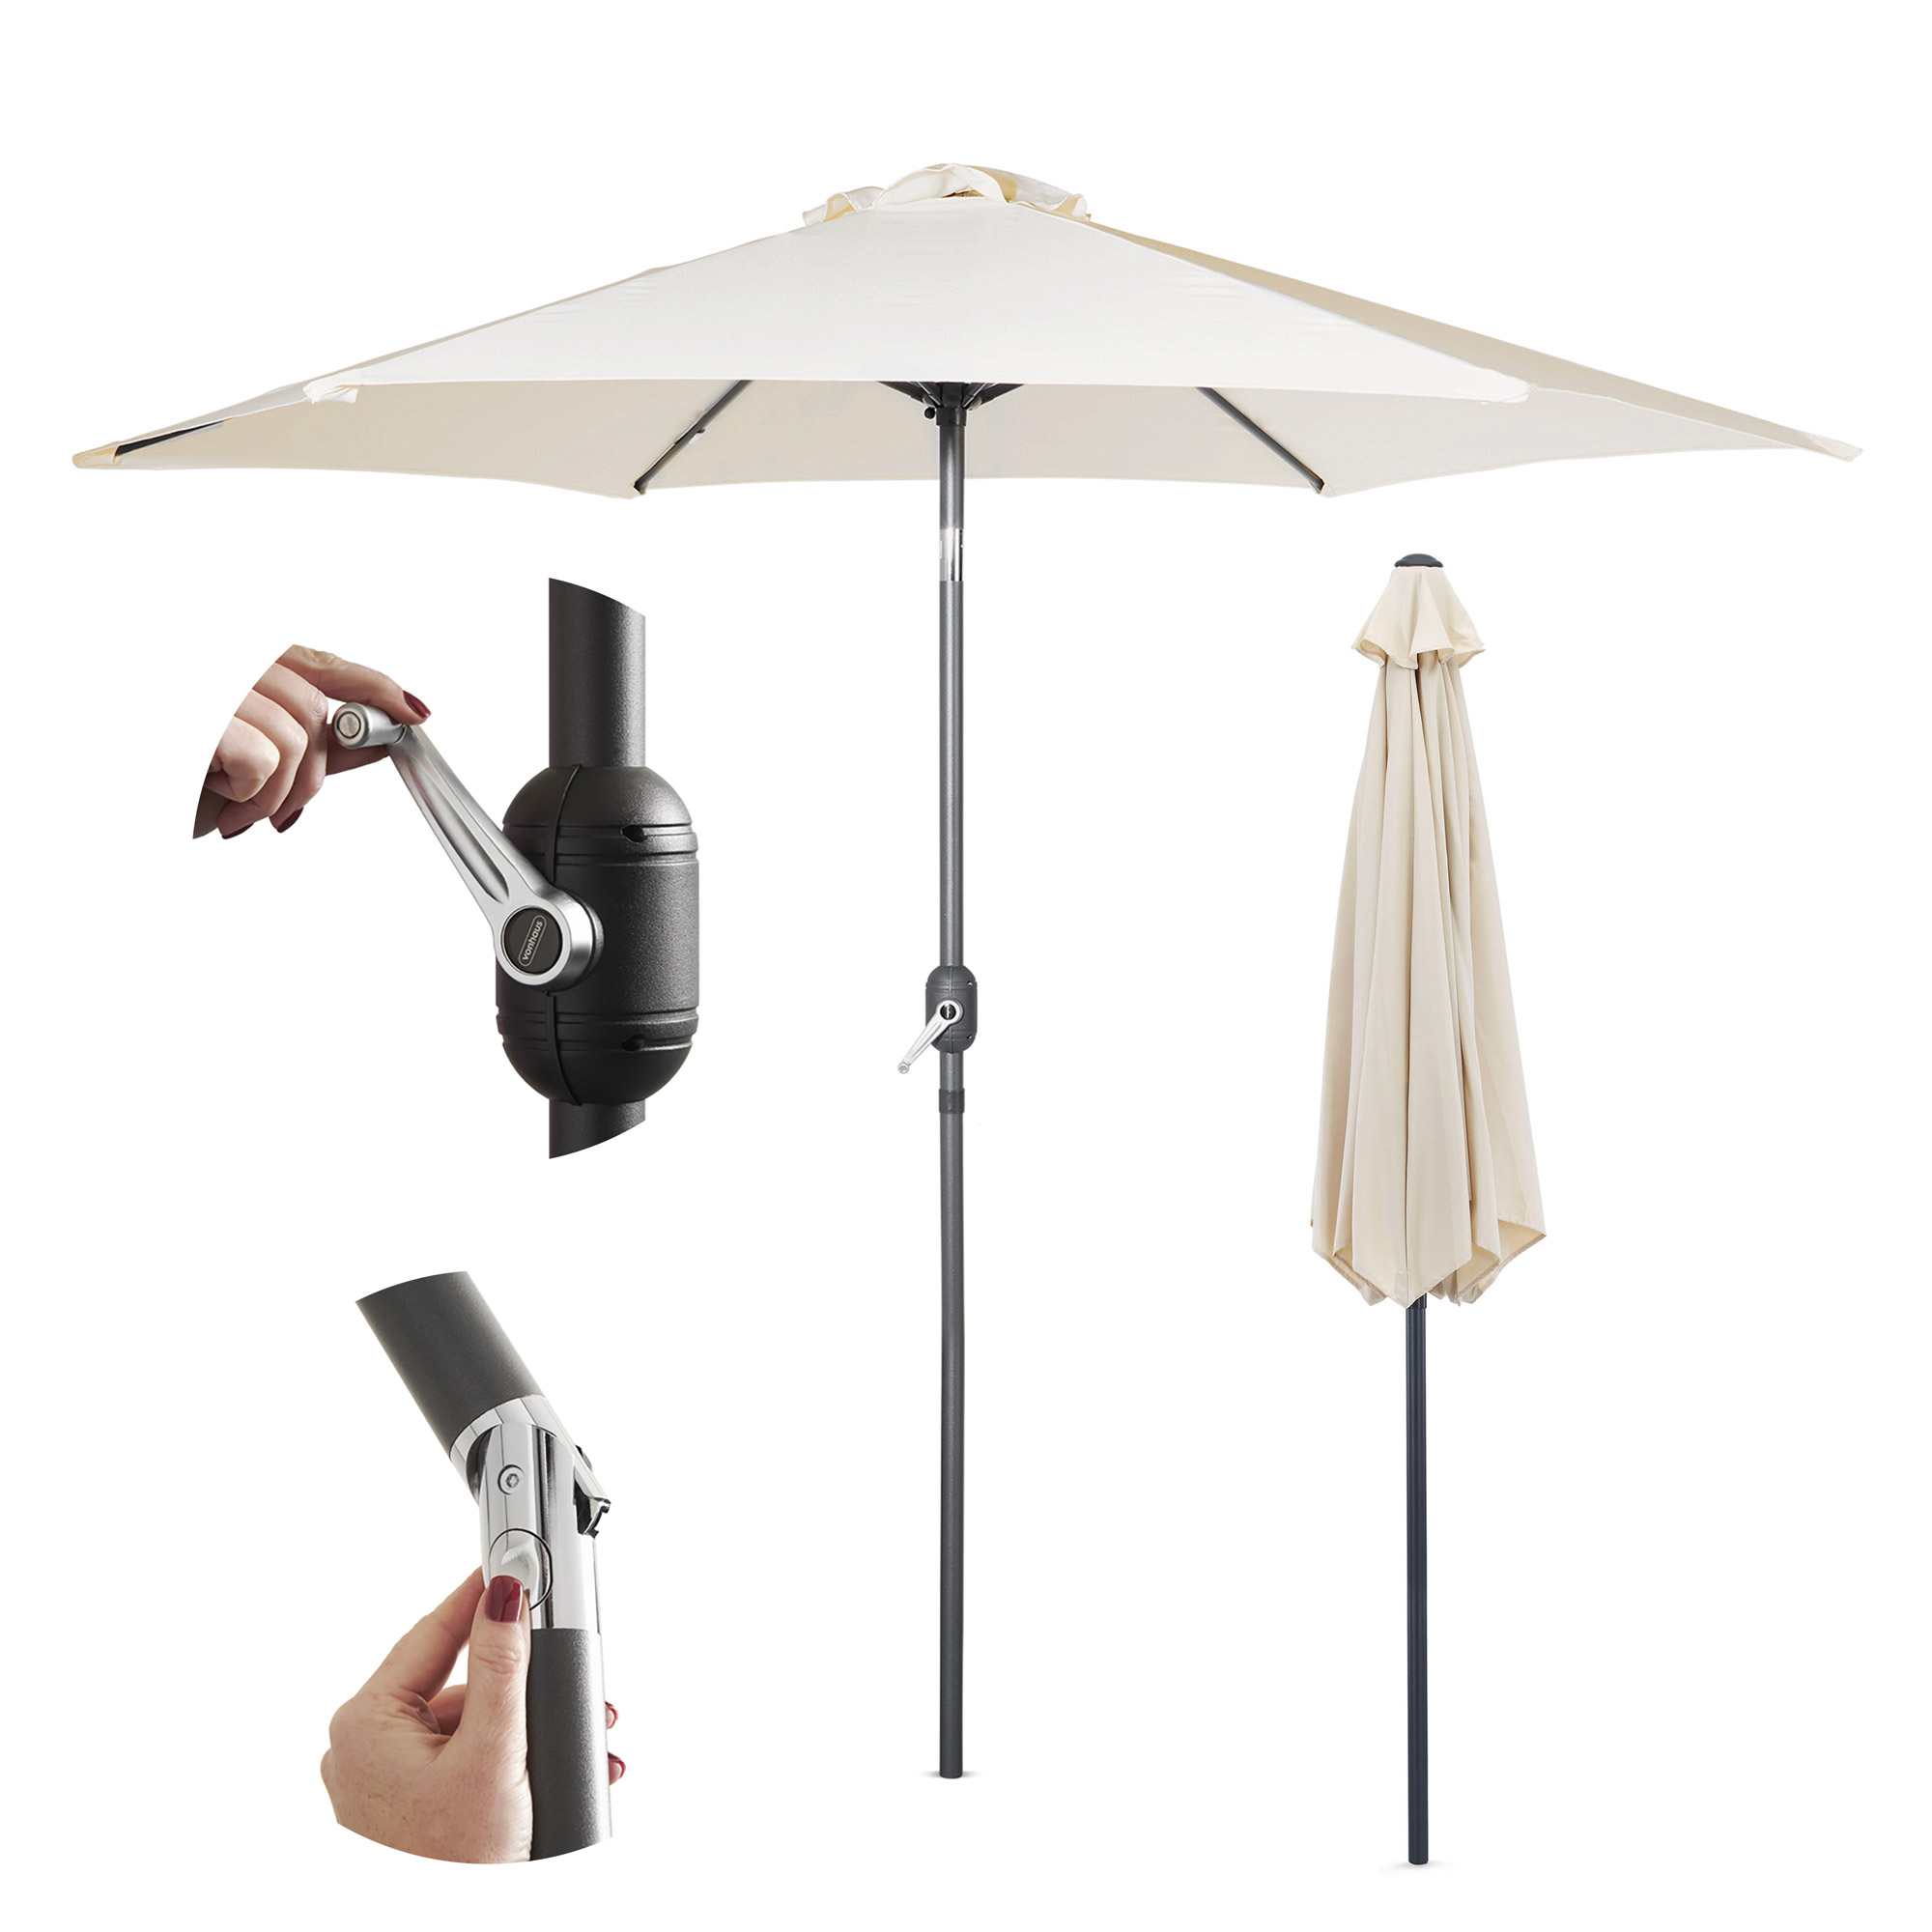 VonHaus Parasol 2.7M Garden Umbrella Sun Shade Canopy with Crank & Tilt Function